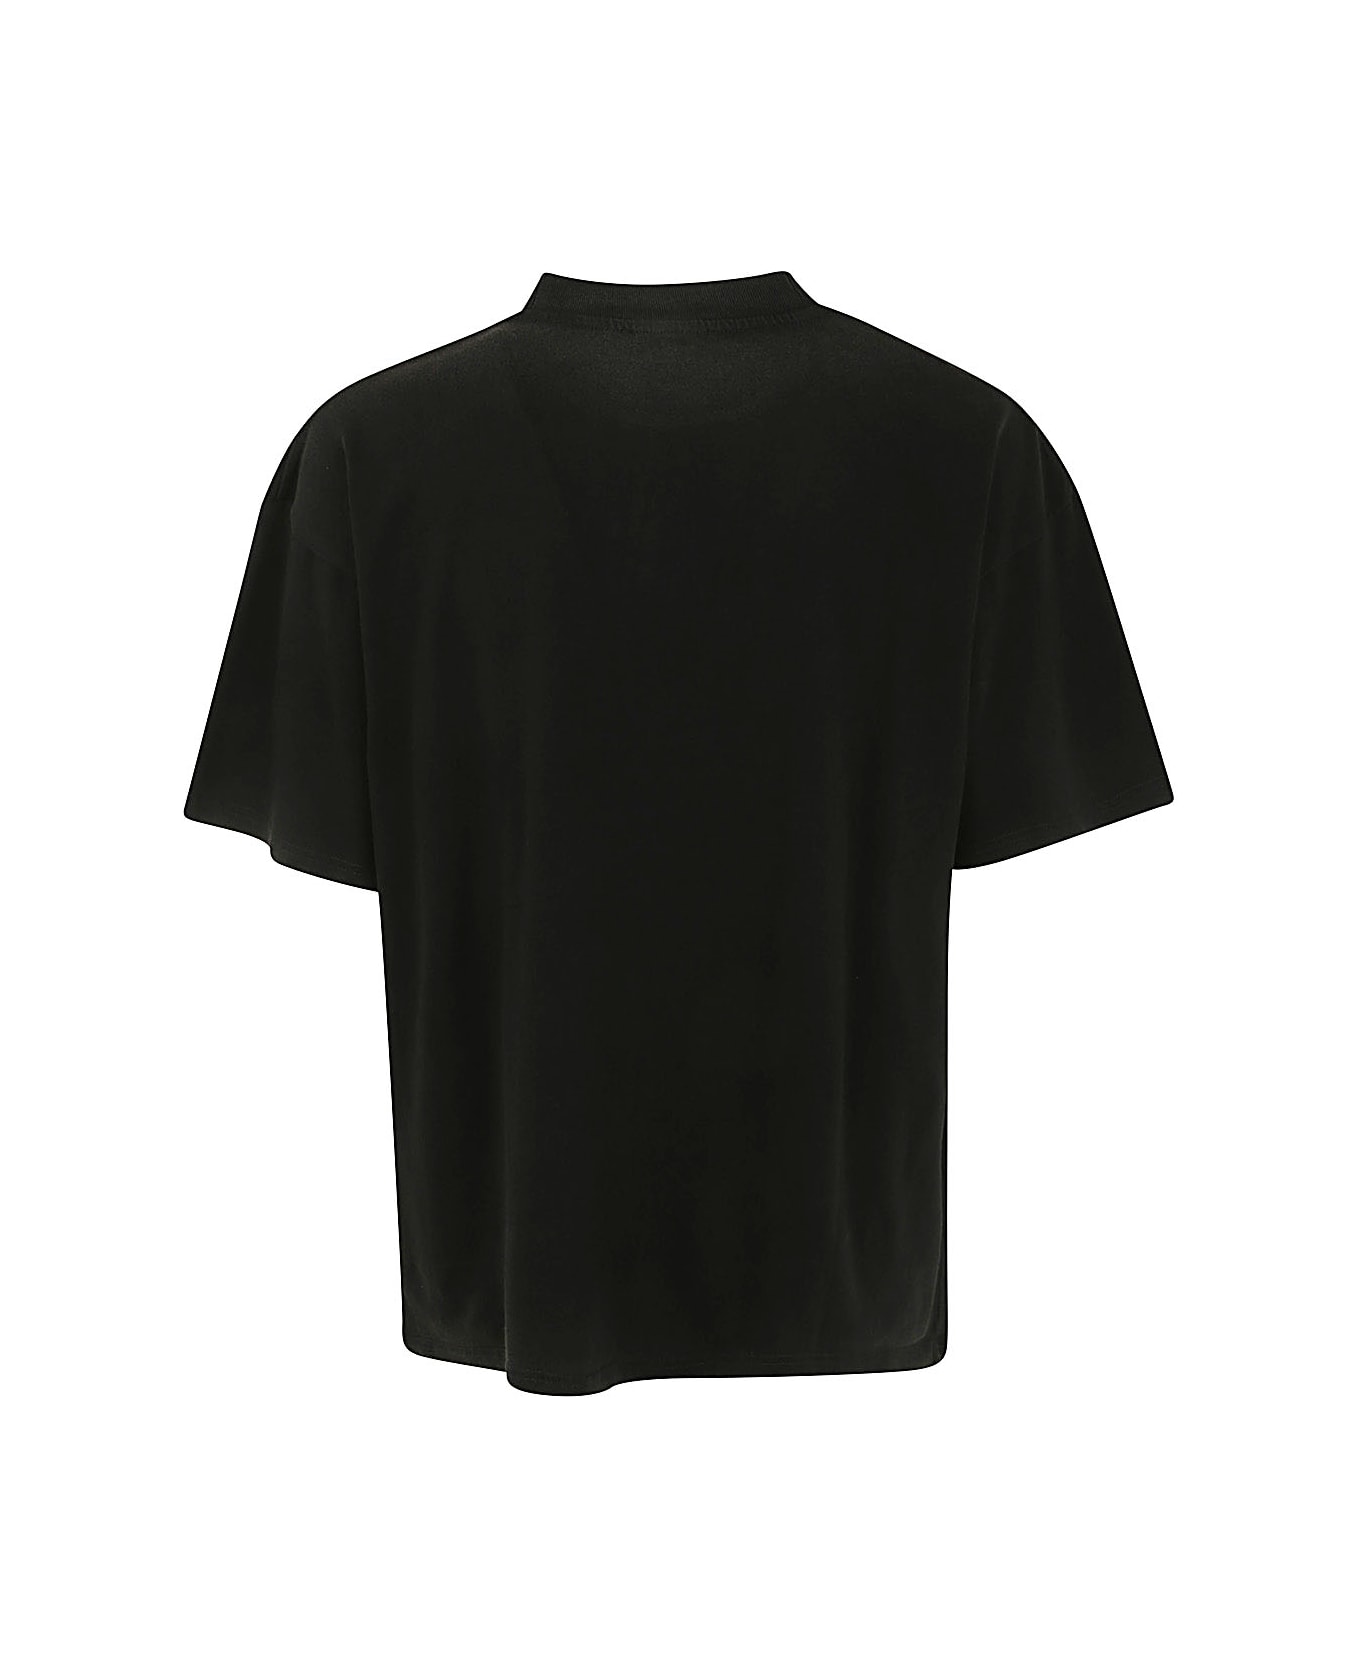 REPRESENT Thoroughbred T-shirt - Vintage Black